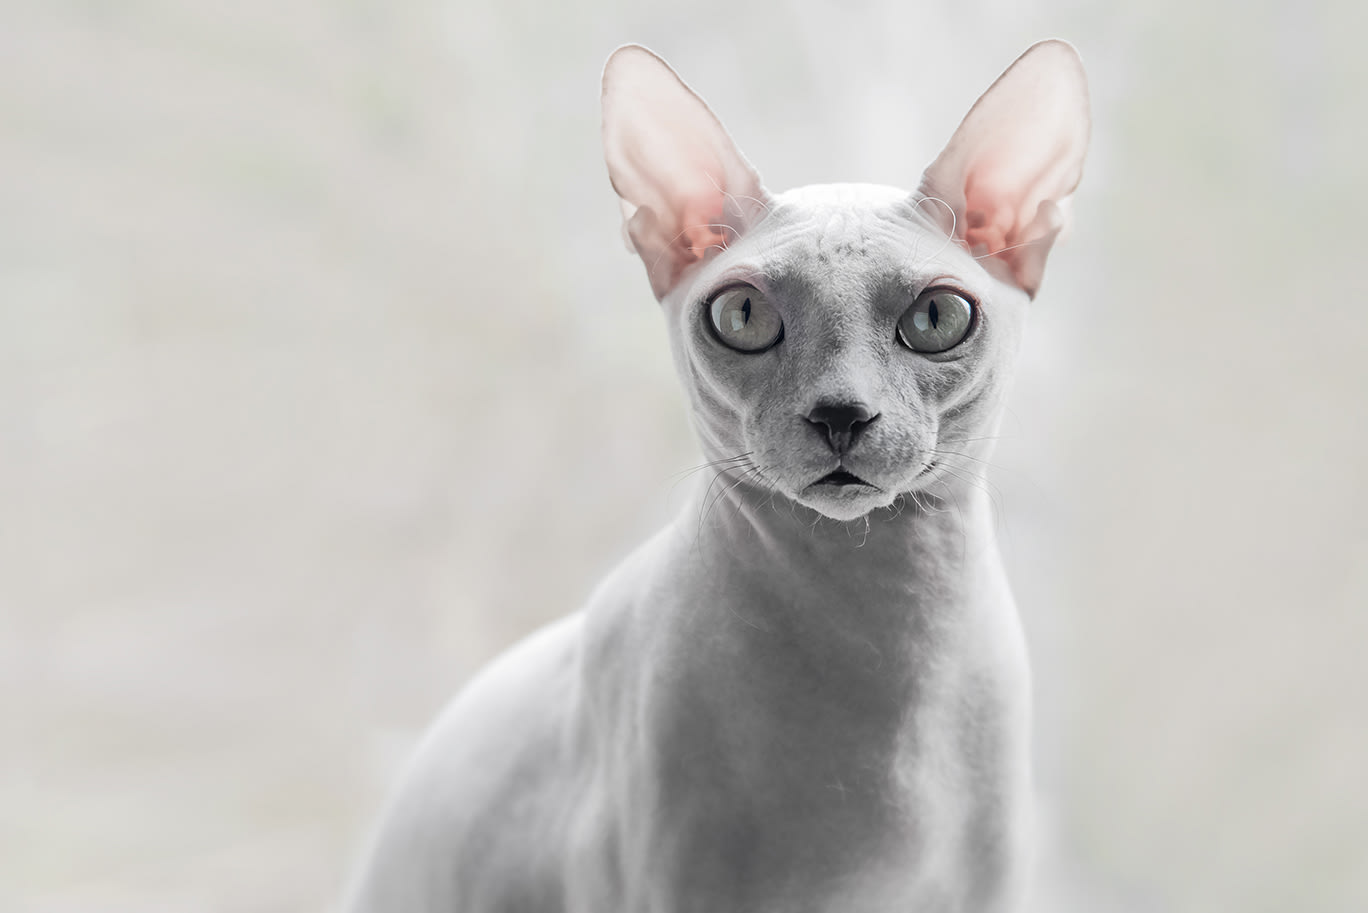 Sleek grey cat with grey eyes looking into camera.